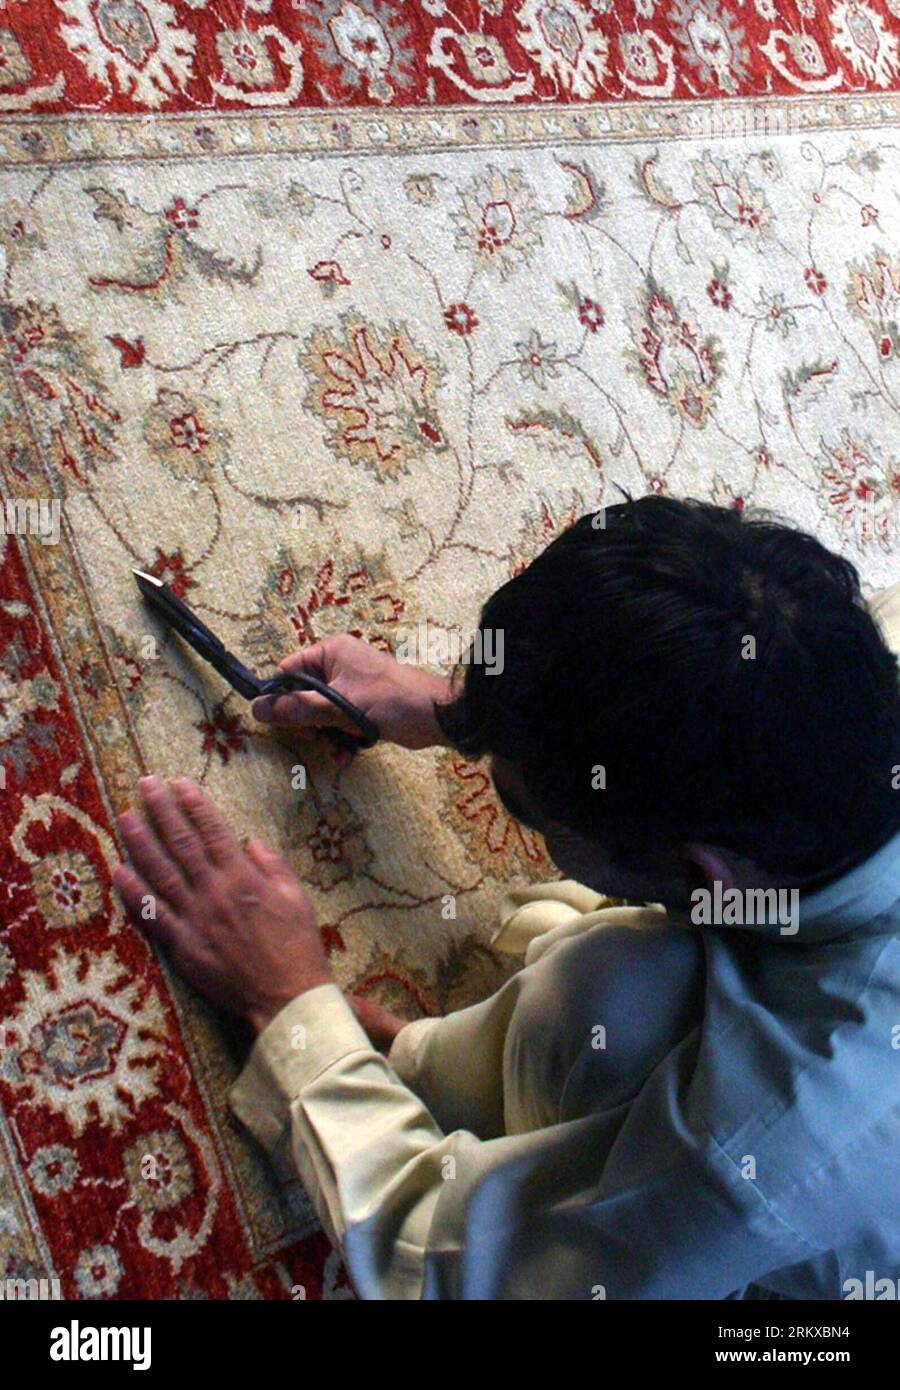 Bildnummer: 58936437  Datum: 20.12.2012  Copyright: imago/Xinhua (121220) -- PESHAWAR, Dec. 20, 2012 (Xinhua) -- A Pakistani man works on a hand-made carpet at a local carpet factory in northwest Pakistan s Peshawar, Dec. 20, 2012. According to reports, Pakistan s carpet exports have witnessed a huge decline of more than 50 percent during the last five years. (Xinhua/Ahmad Sidique) (zf) PAKISTAN-PESHAWAR-CARPET EXPORTS-DECREASE PUBLICATIONxNOTxINxCHN Wirtschaft Arbeit Teppich Fabrik Teppichfabrik x0x xdd 2012 hoch      58936437 Date 20 12 2012 Copyright Imago XINHUA  Peshawar DEC 20 2012 XINHU Stock Photo